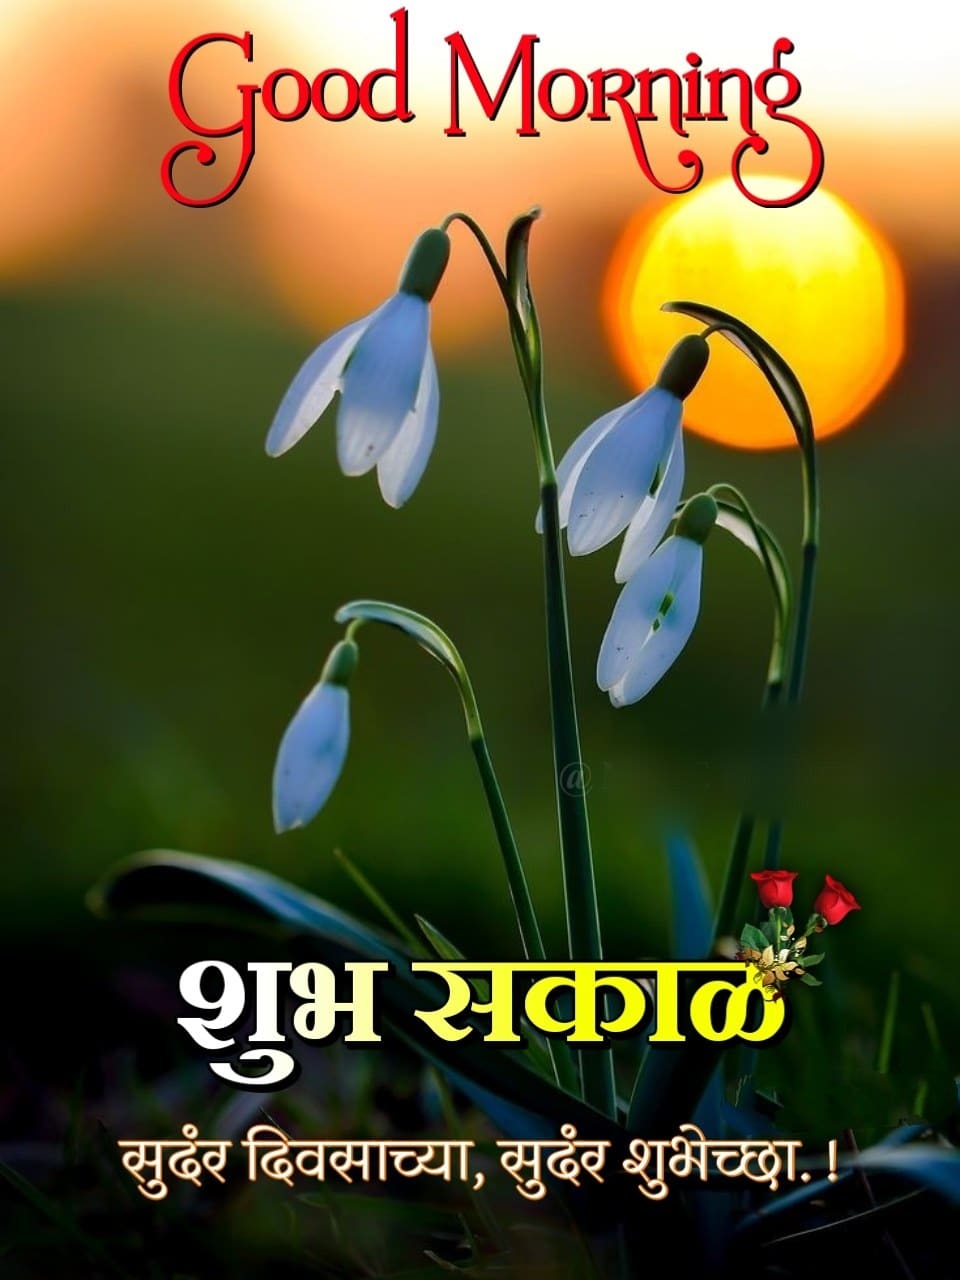 Shubh Sakal Flower Images (25)